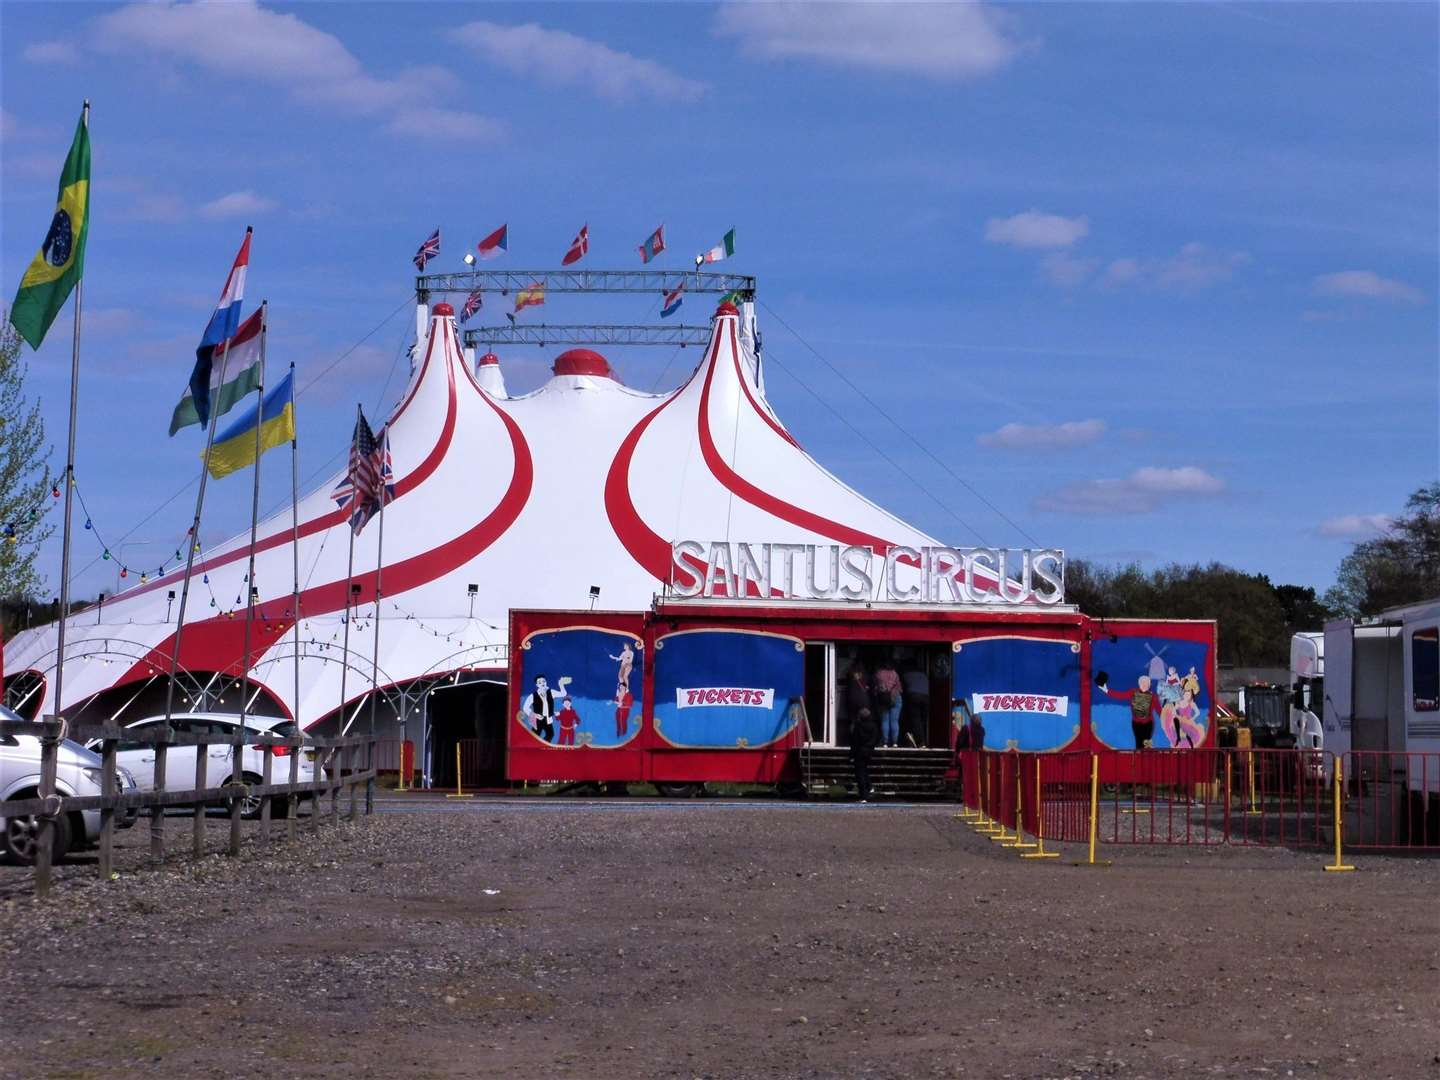 New Big Top for Santus Circus. Picture: Jon Anton